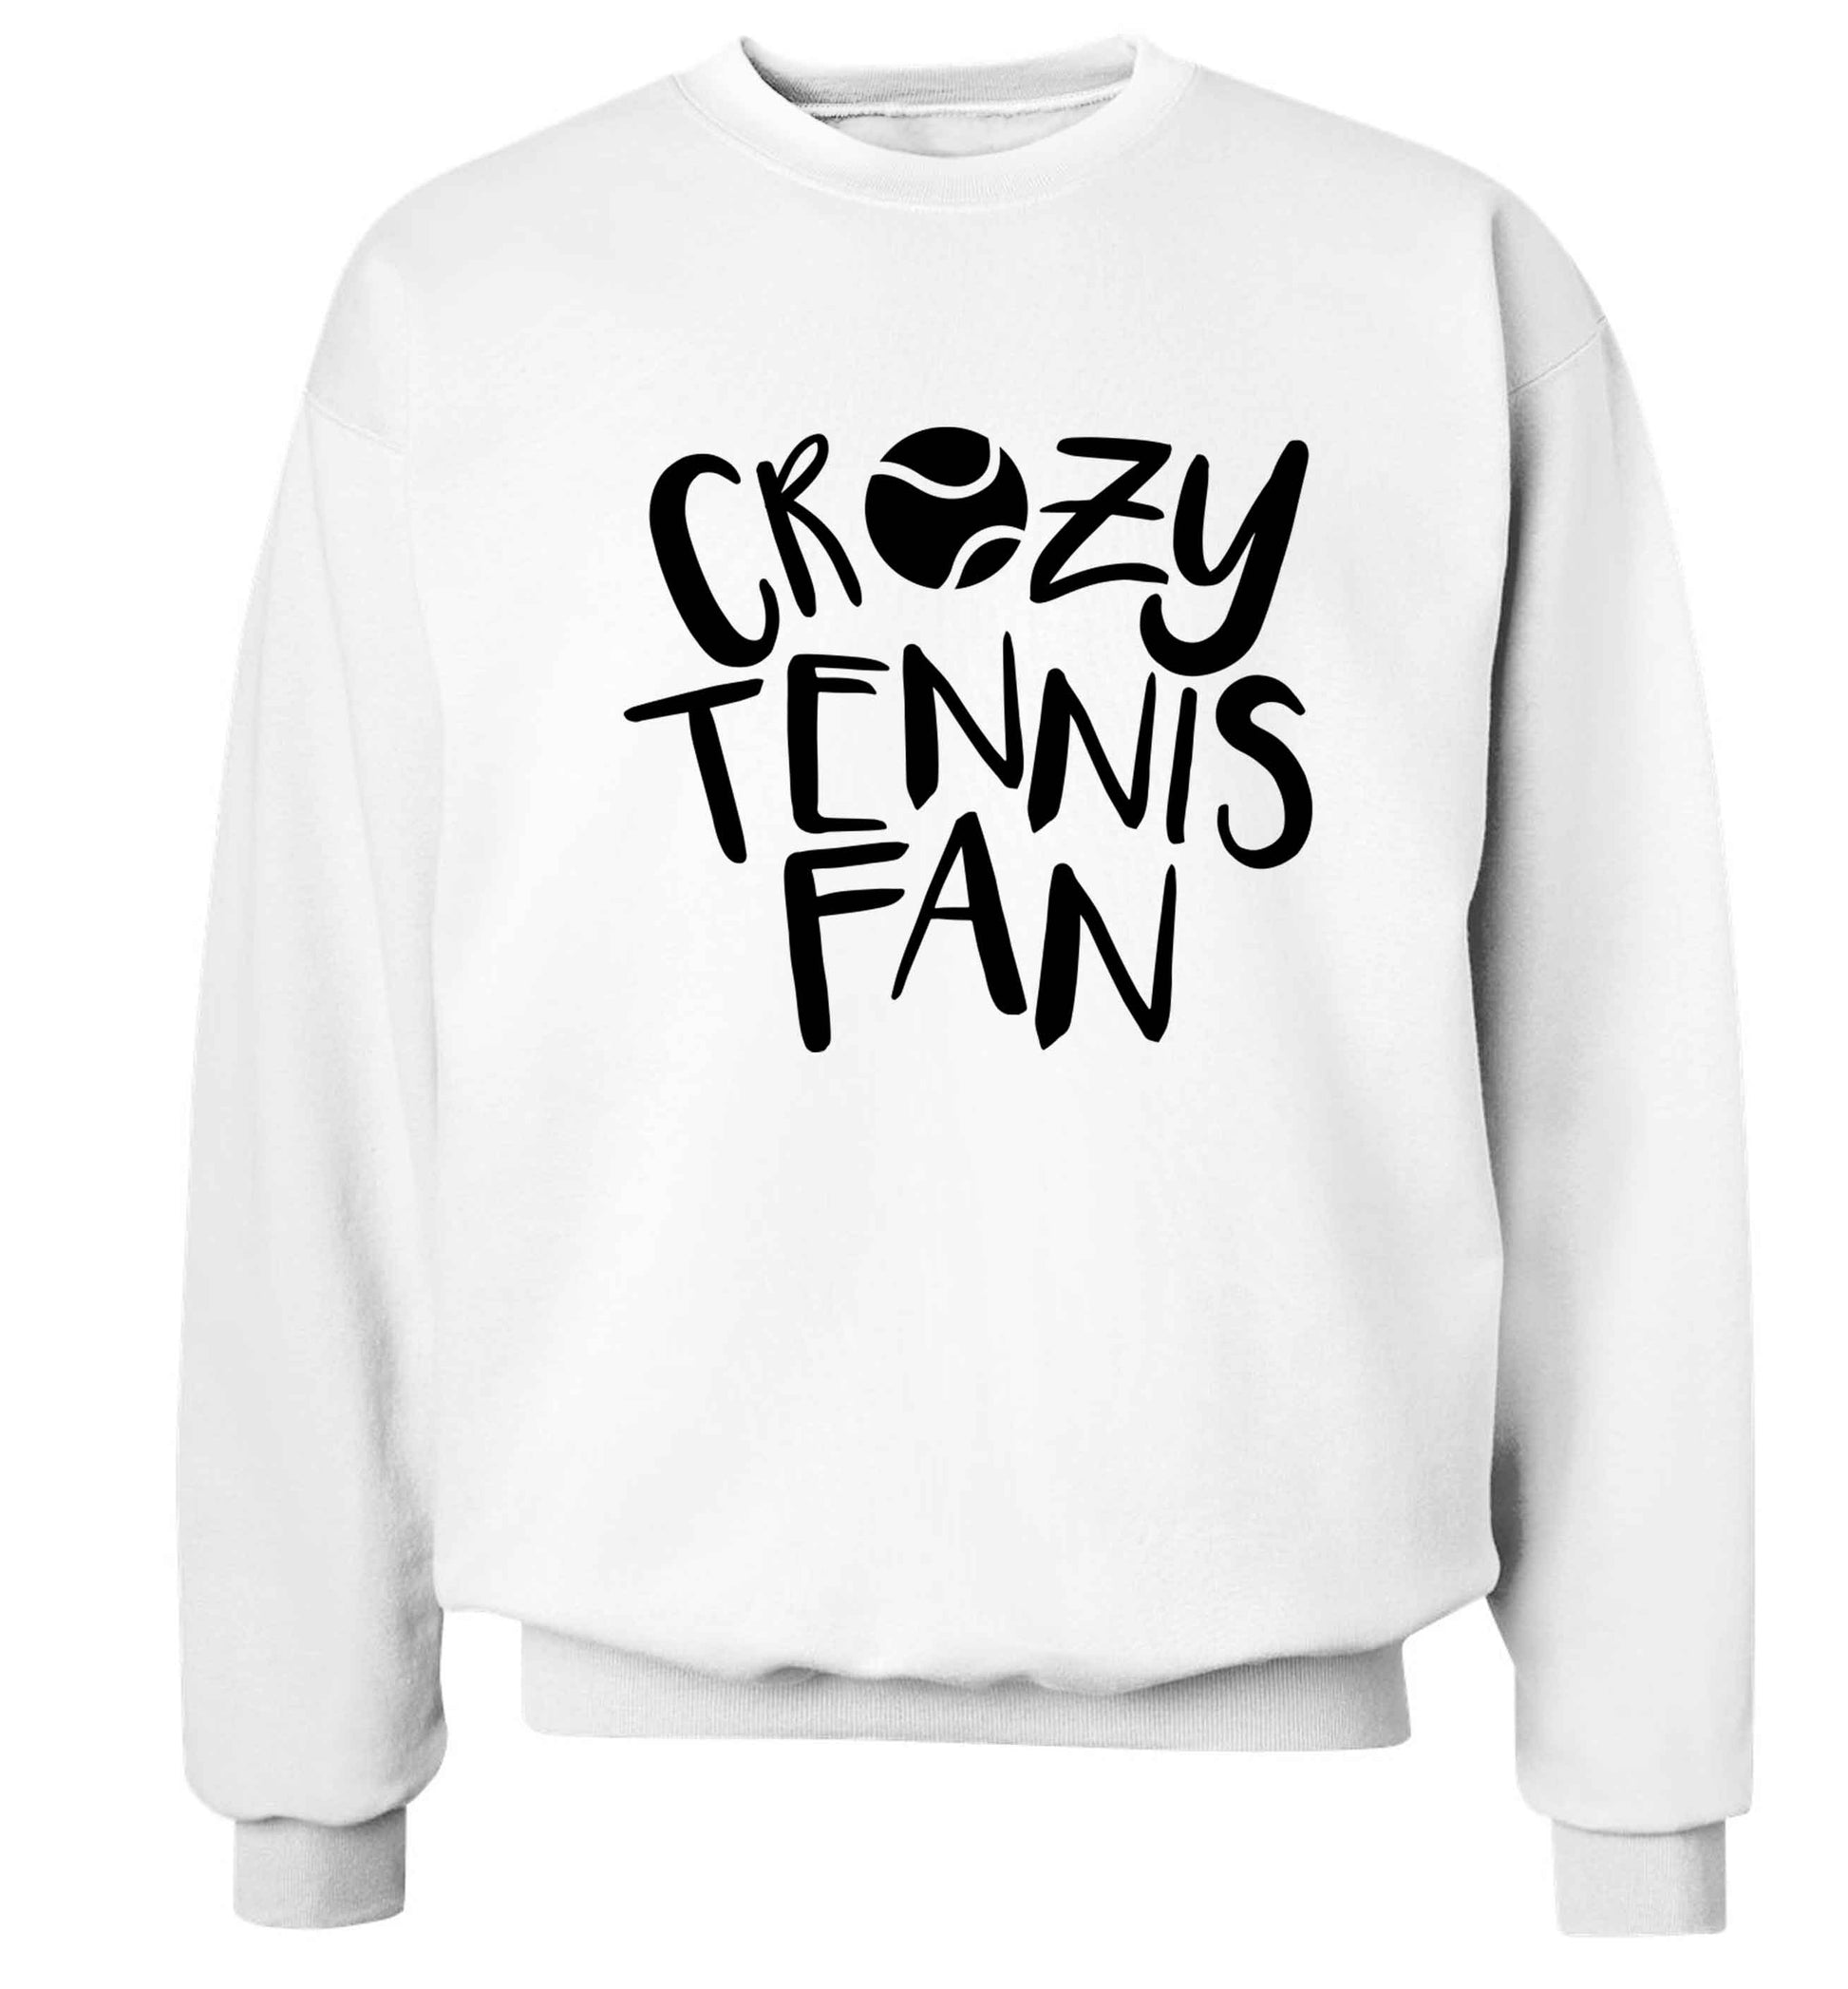 Crazy tennis fan Adult's unisex white Sweater 2XL